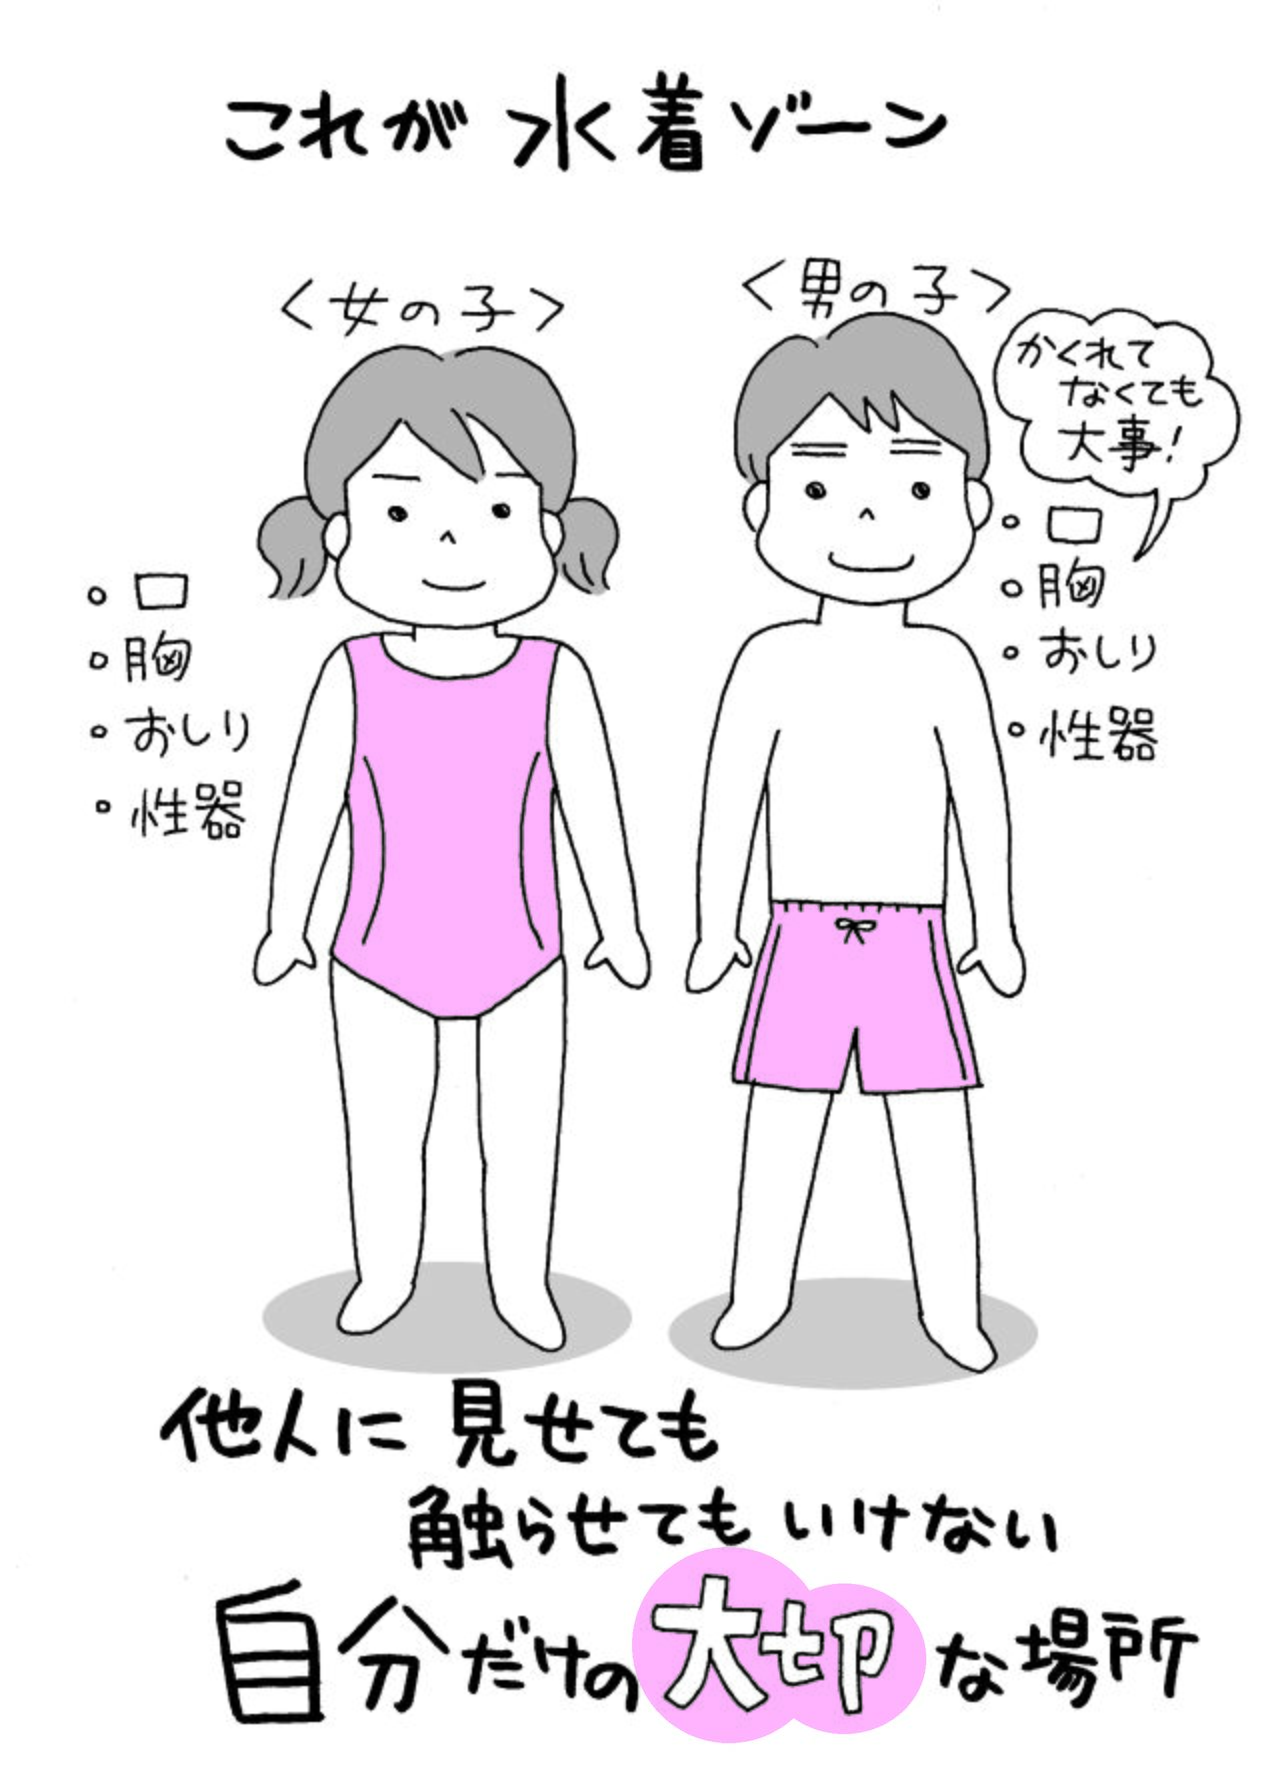 Nojima将身体的私密部位称为“泳装区域”，并努力推广这种教育法。插画：Ogura Naomi（同书）